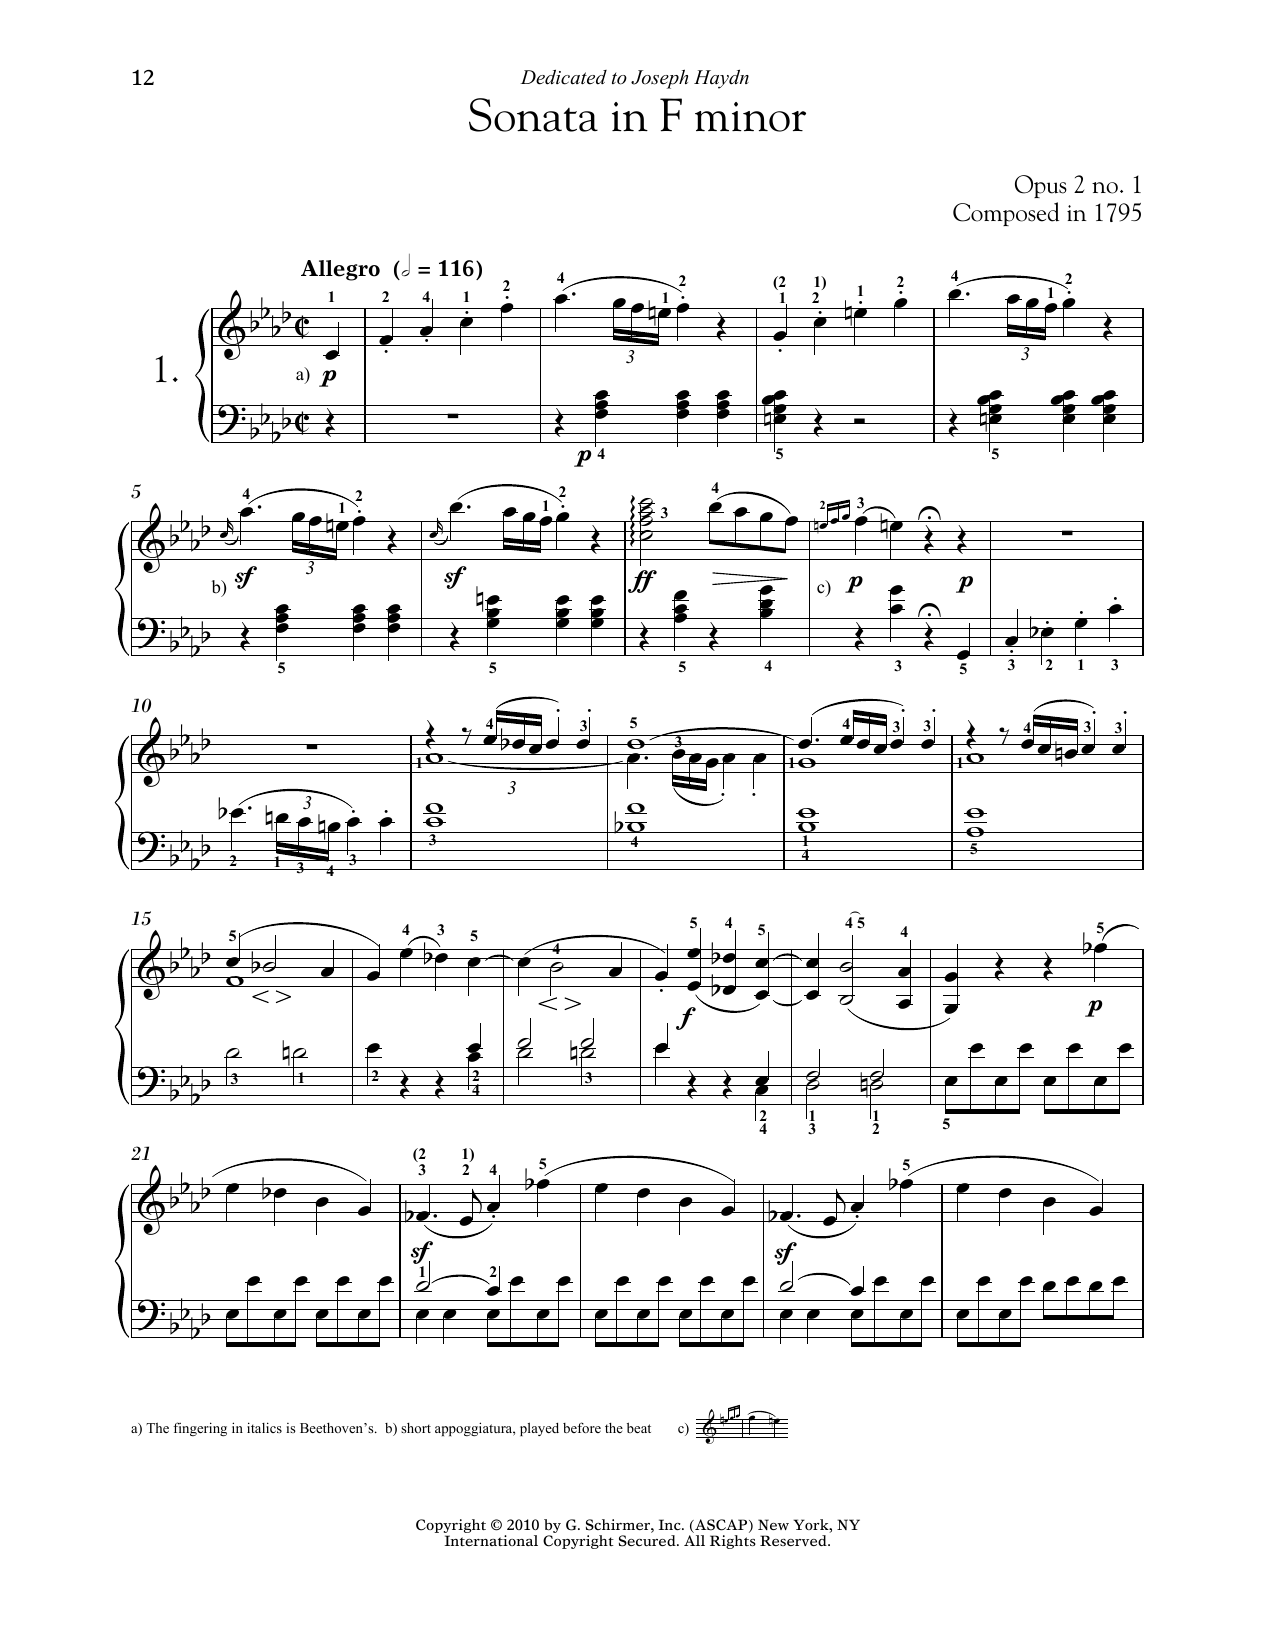 Ludwig van Beethoven Piano Sonata No. 1 In F Minor, Op. 2, No. 1 Sheet Music Notes & Chords for Piano - Download or Print PDF